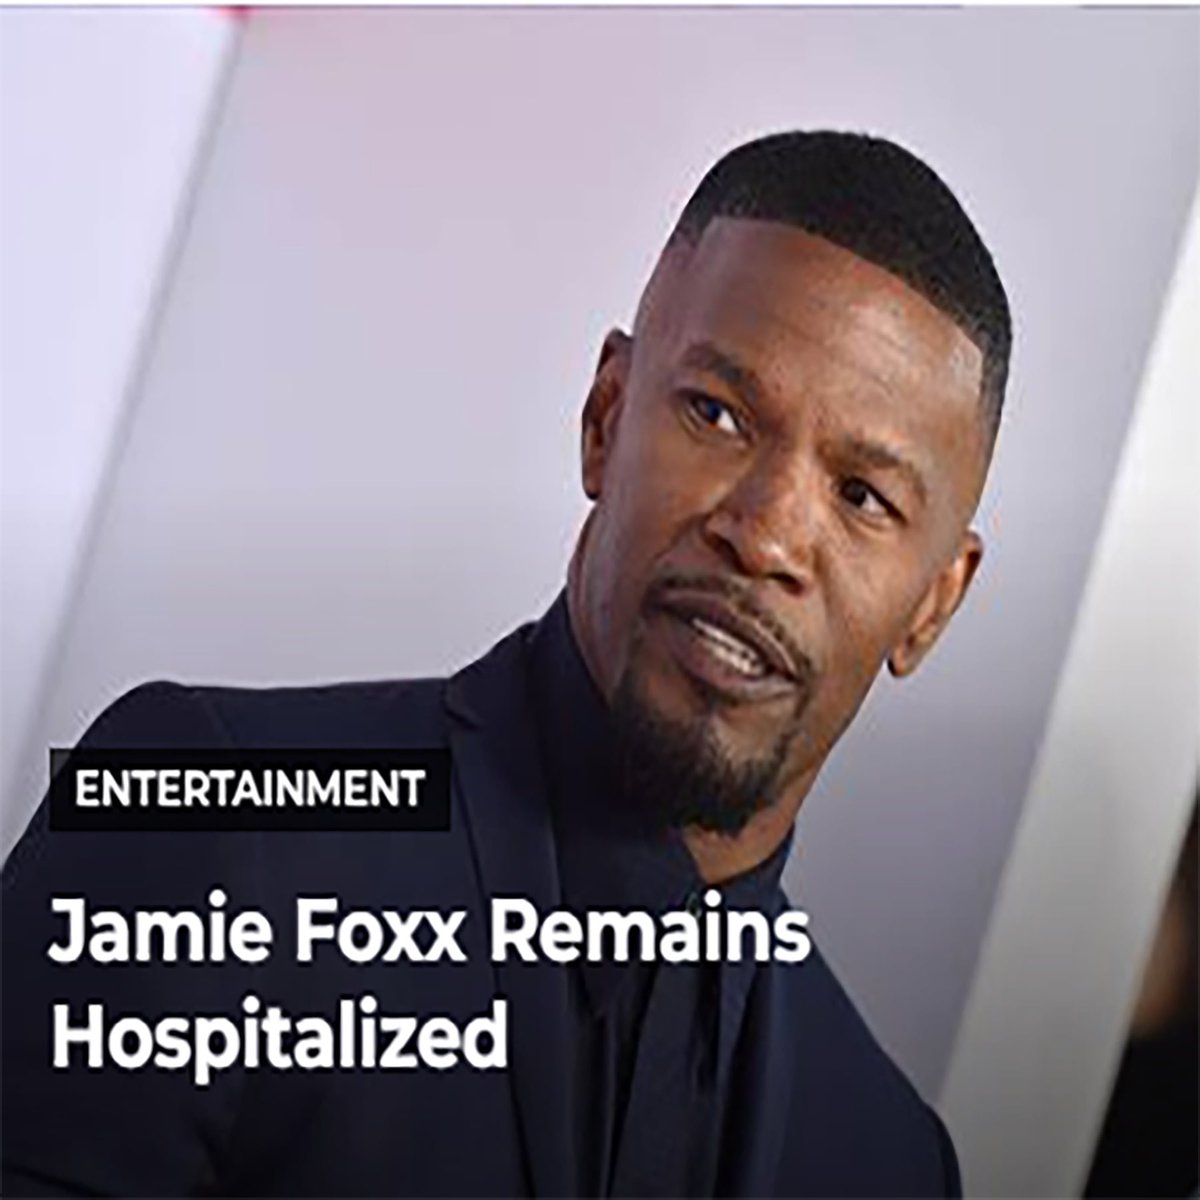 Jamie Foxx Remains Hospitalized

#AccessUnlocked #news #media #jamiefoxx #hospital #actors #raycharles #ray #promo #branding #marketing 

To read more visit:  AccessUnlocked.com

accessunlocked.com/jamie-foxx-rem…